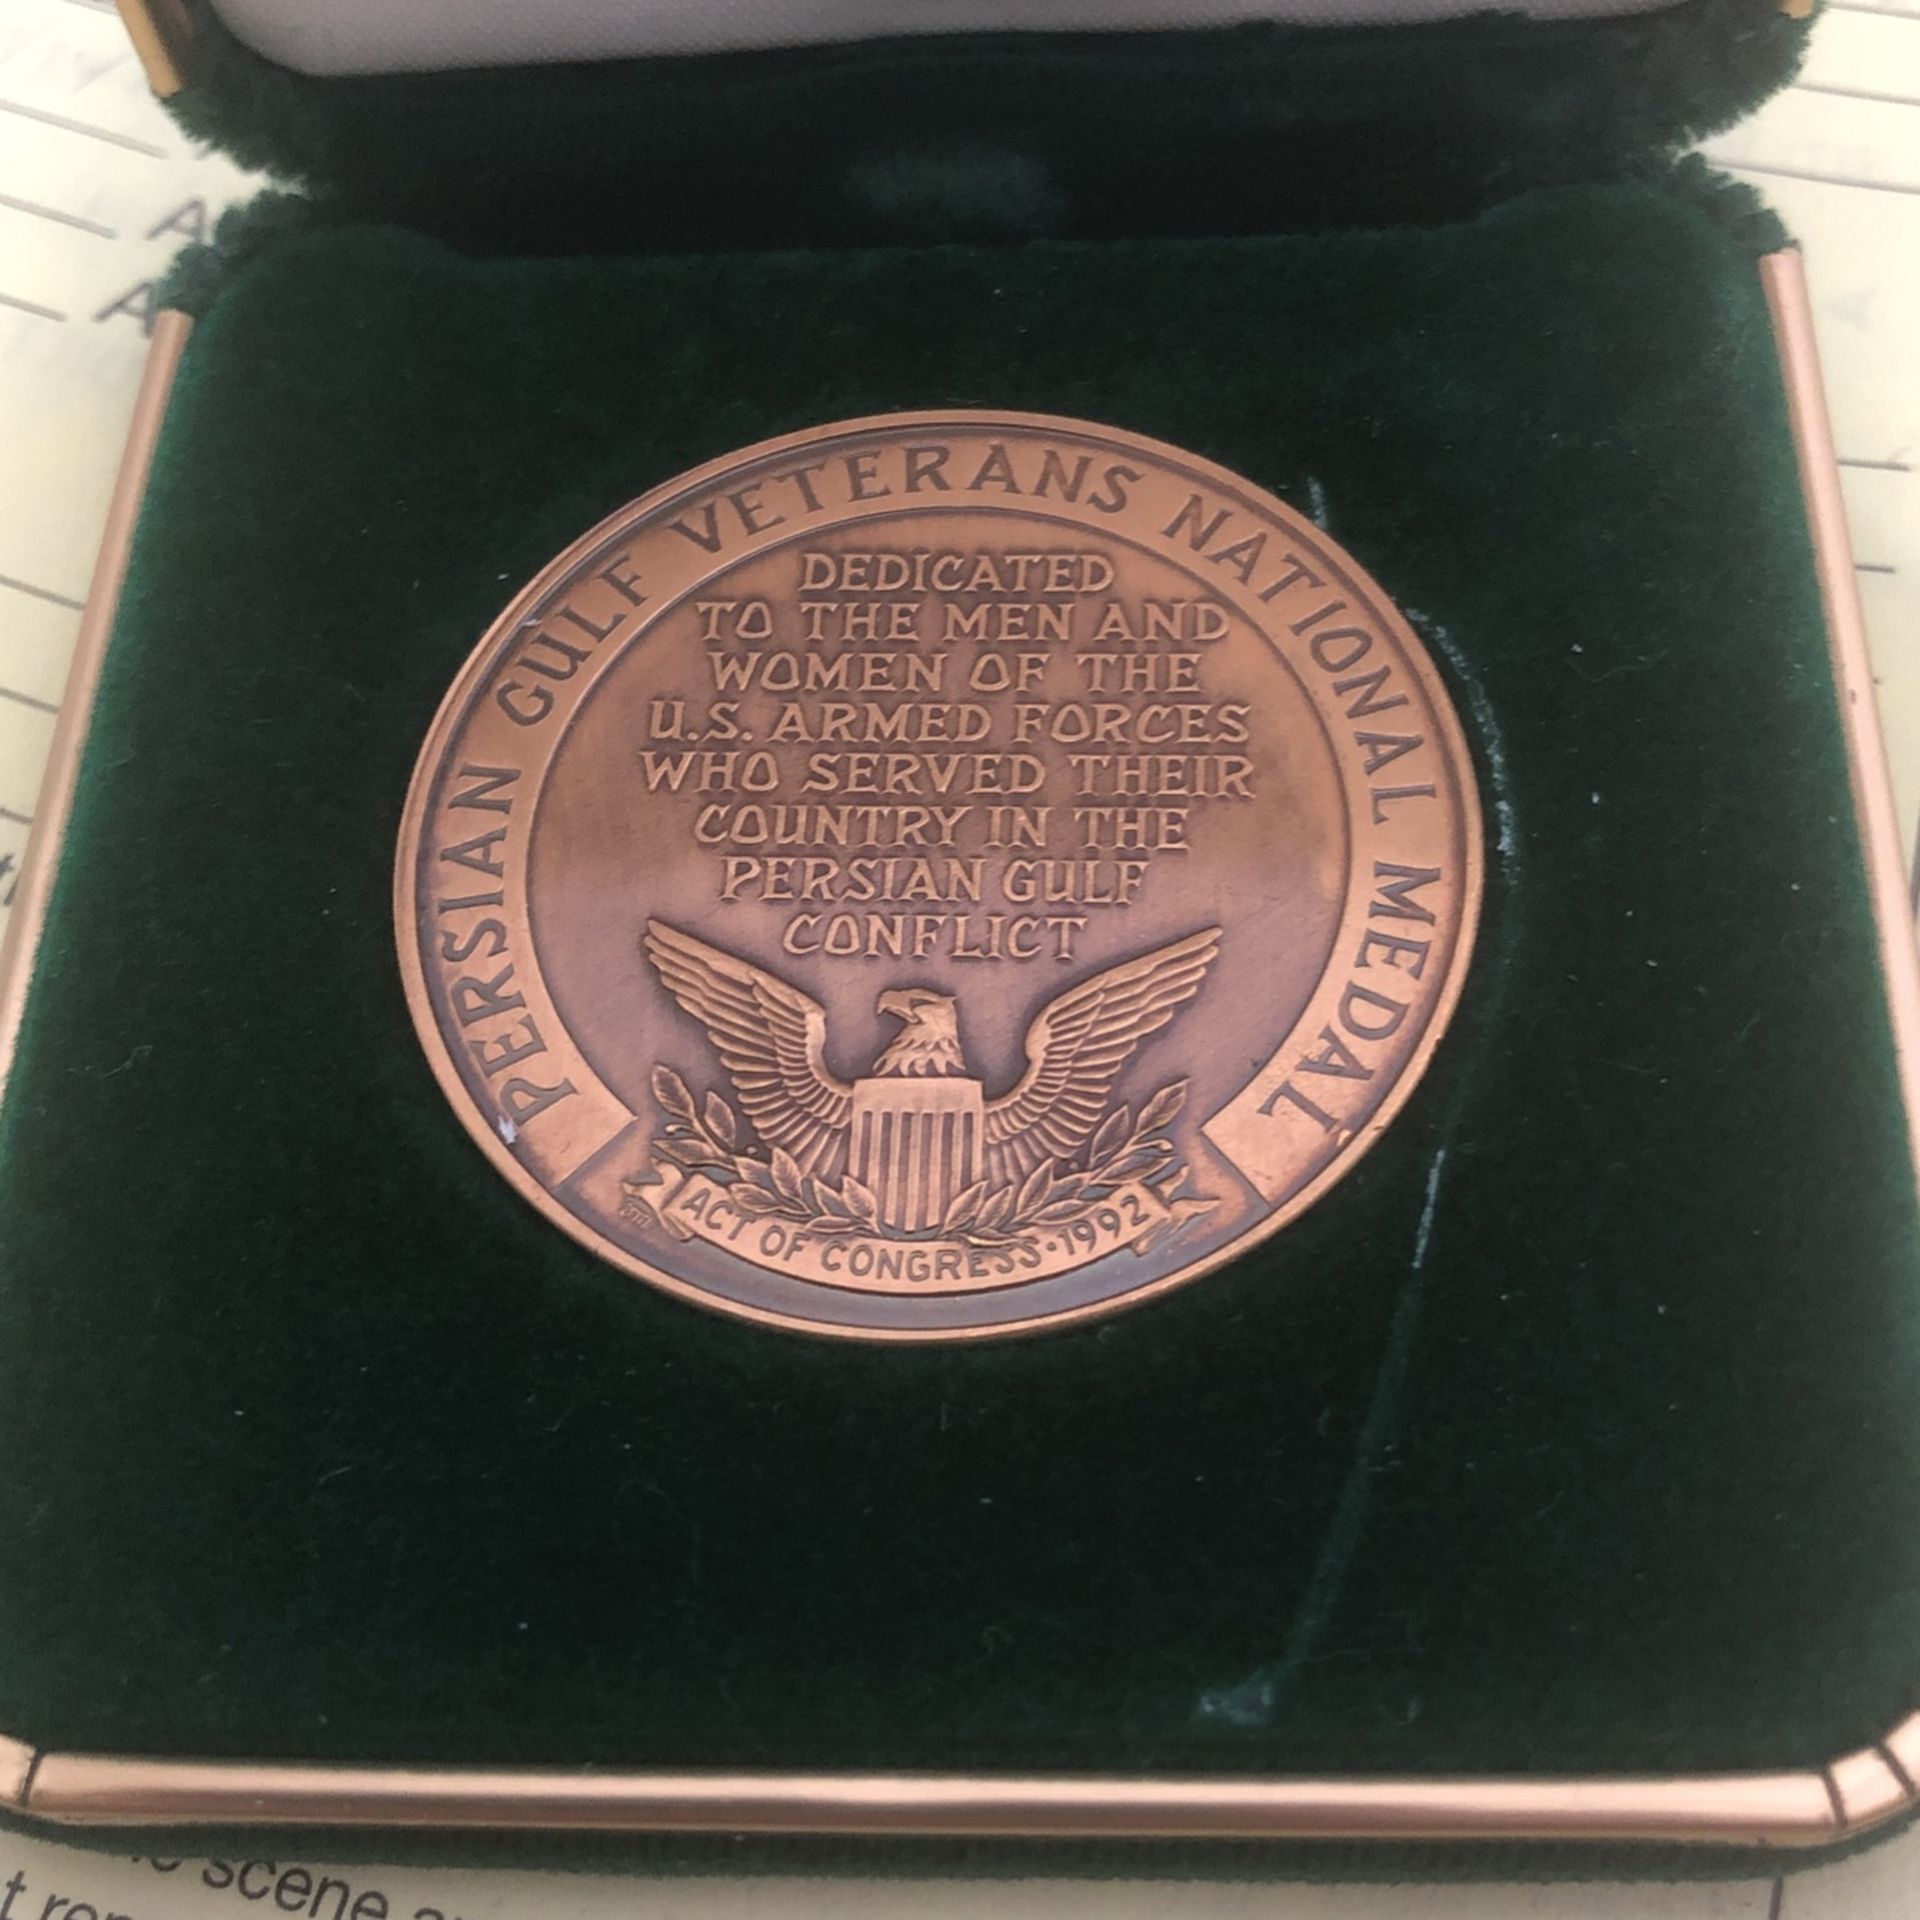 1993 Persian Gulf Veterans National Medal (bronze)